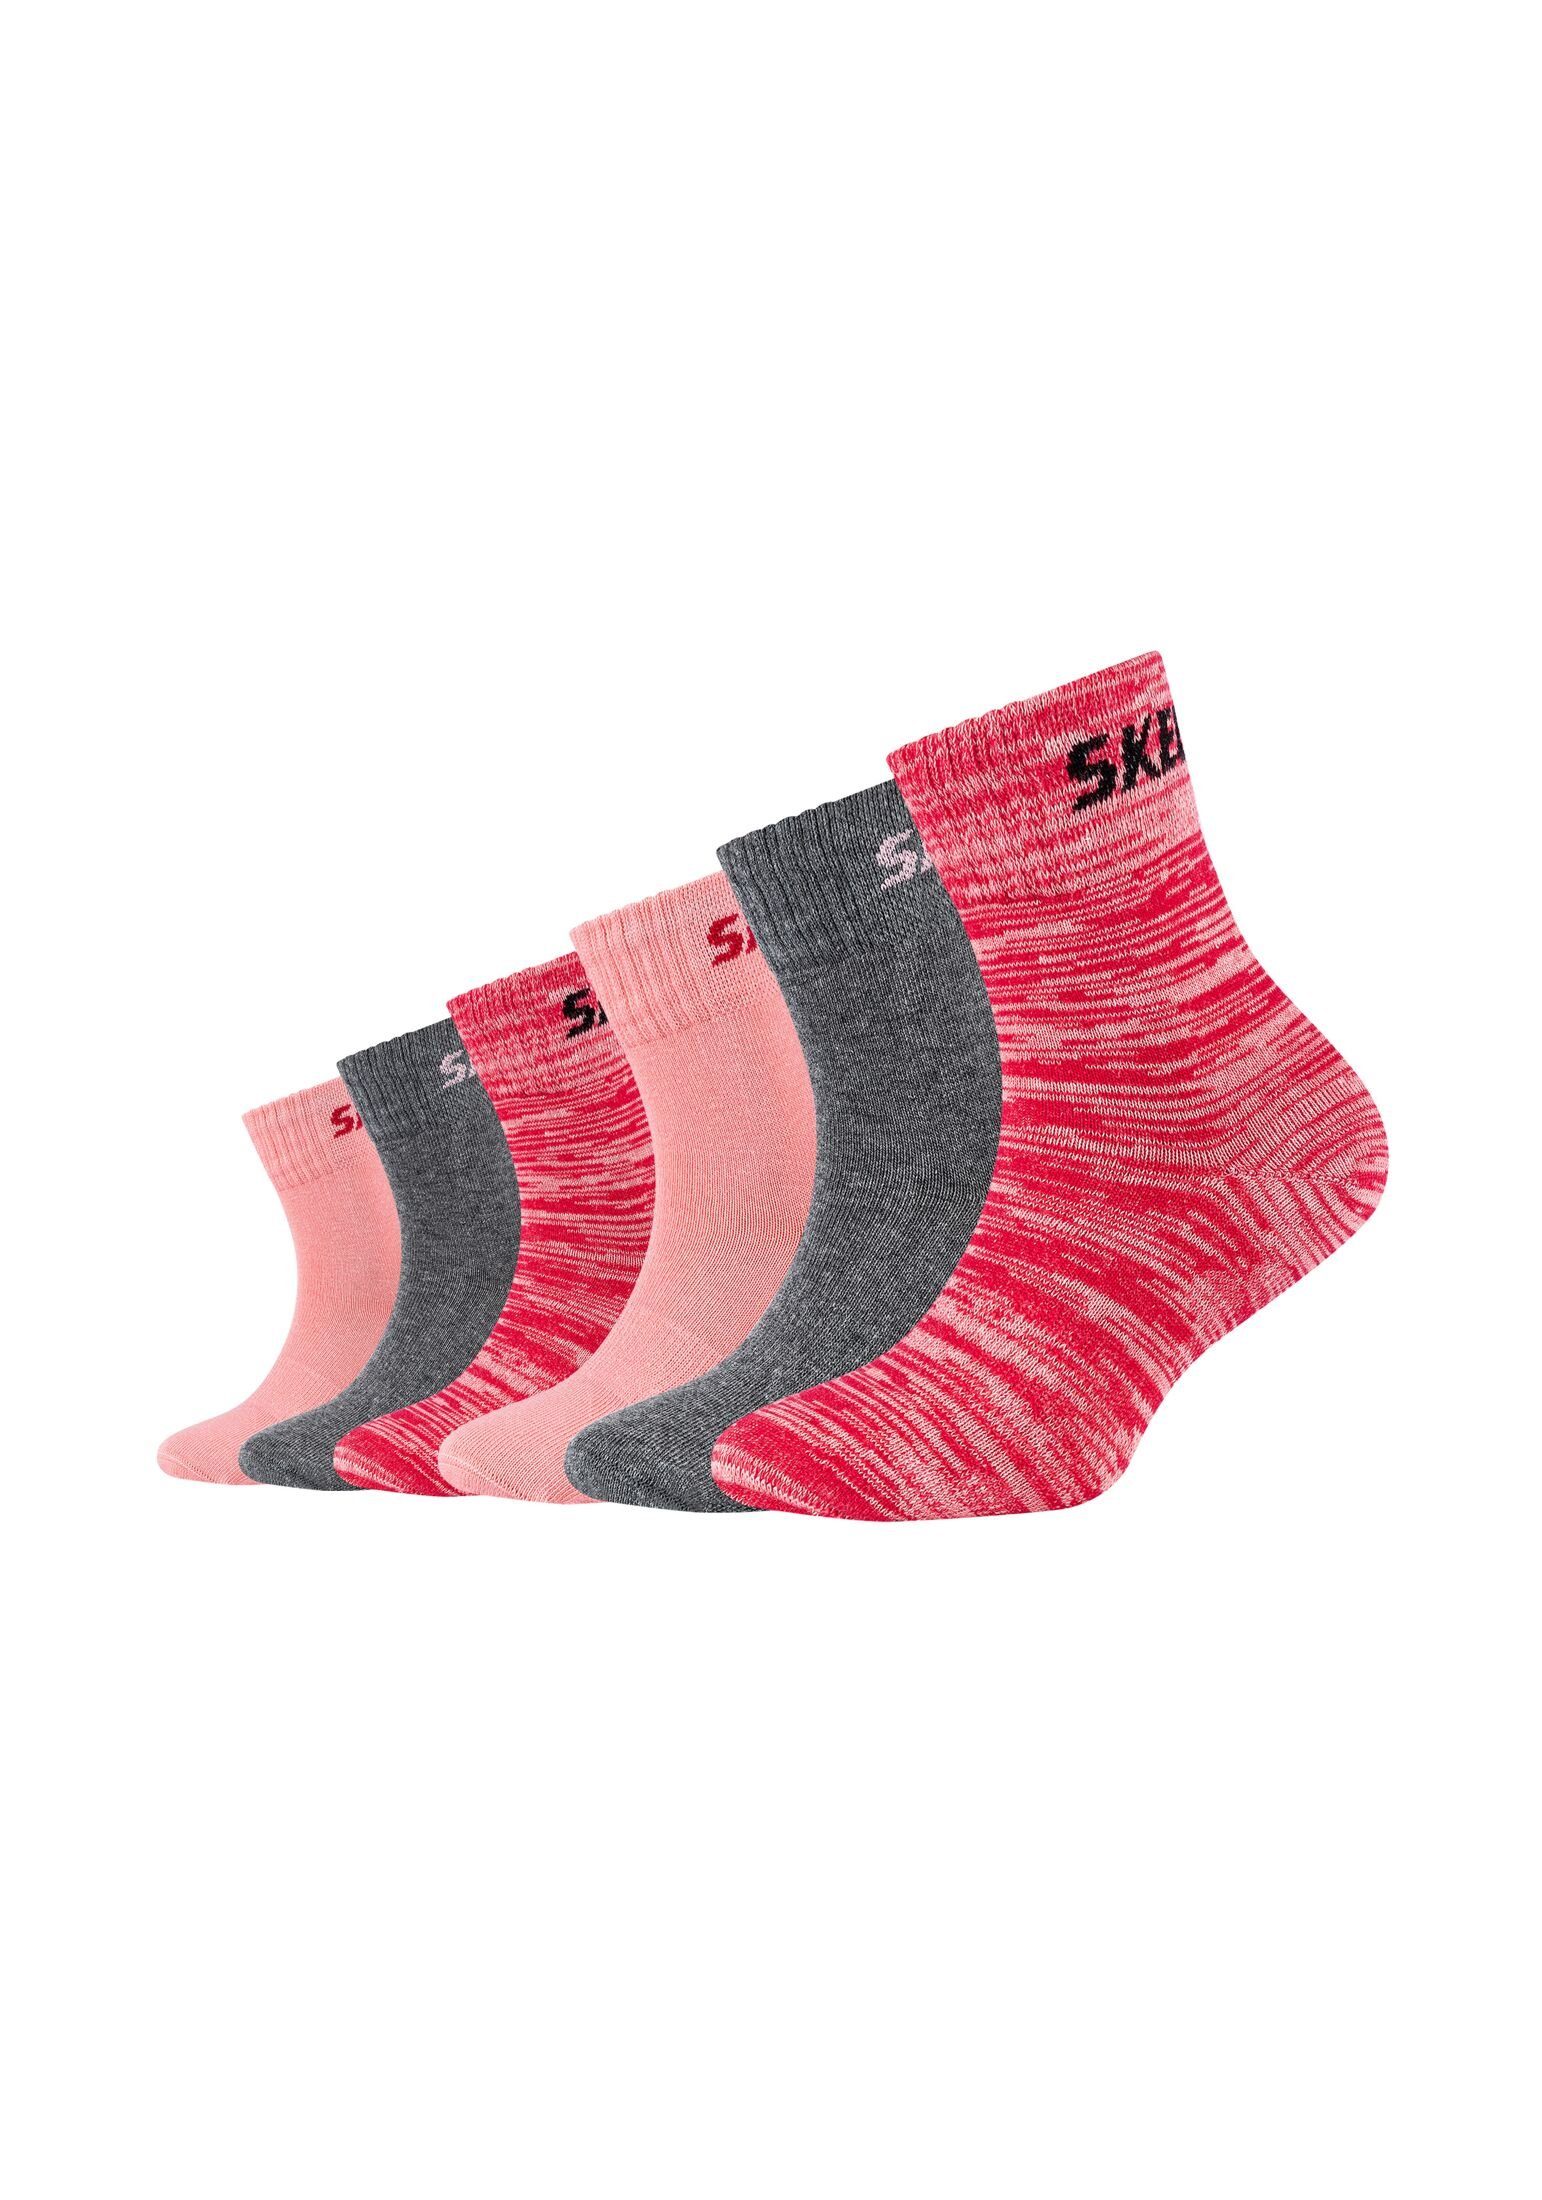 Skechers Socken Socken 6er Pack flamingo mix